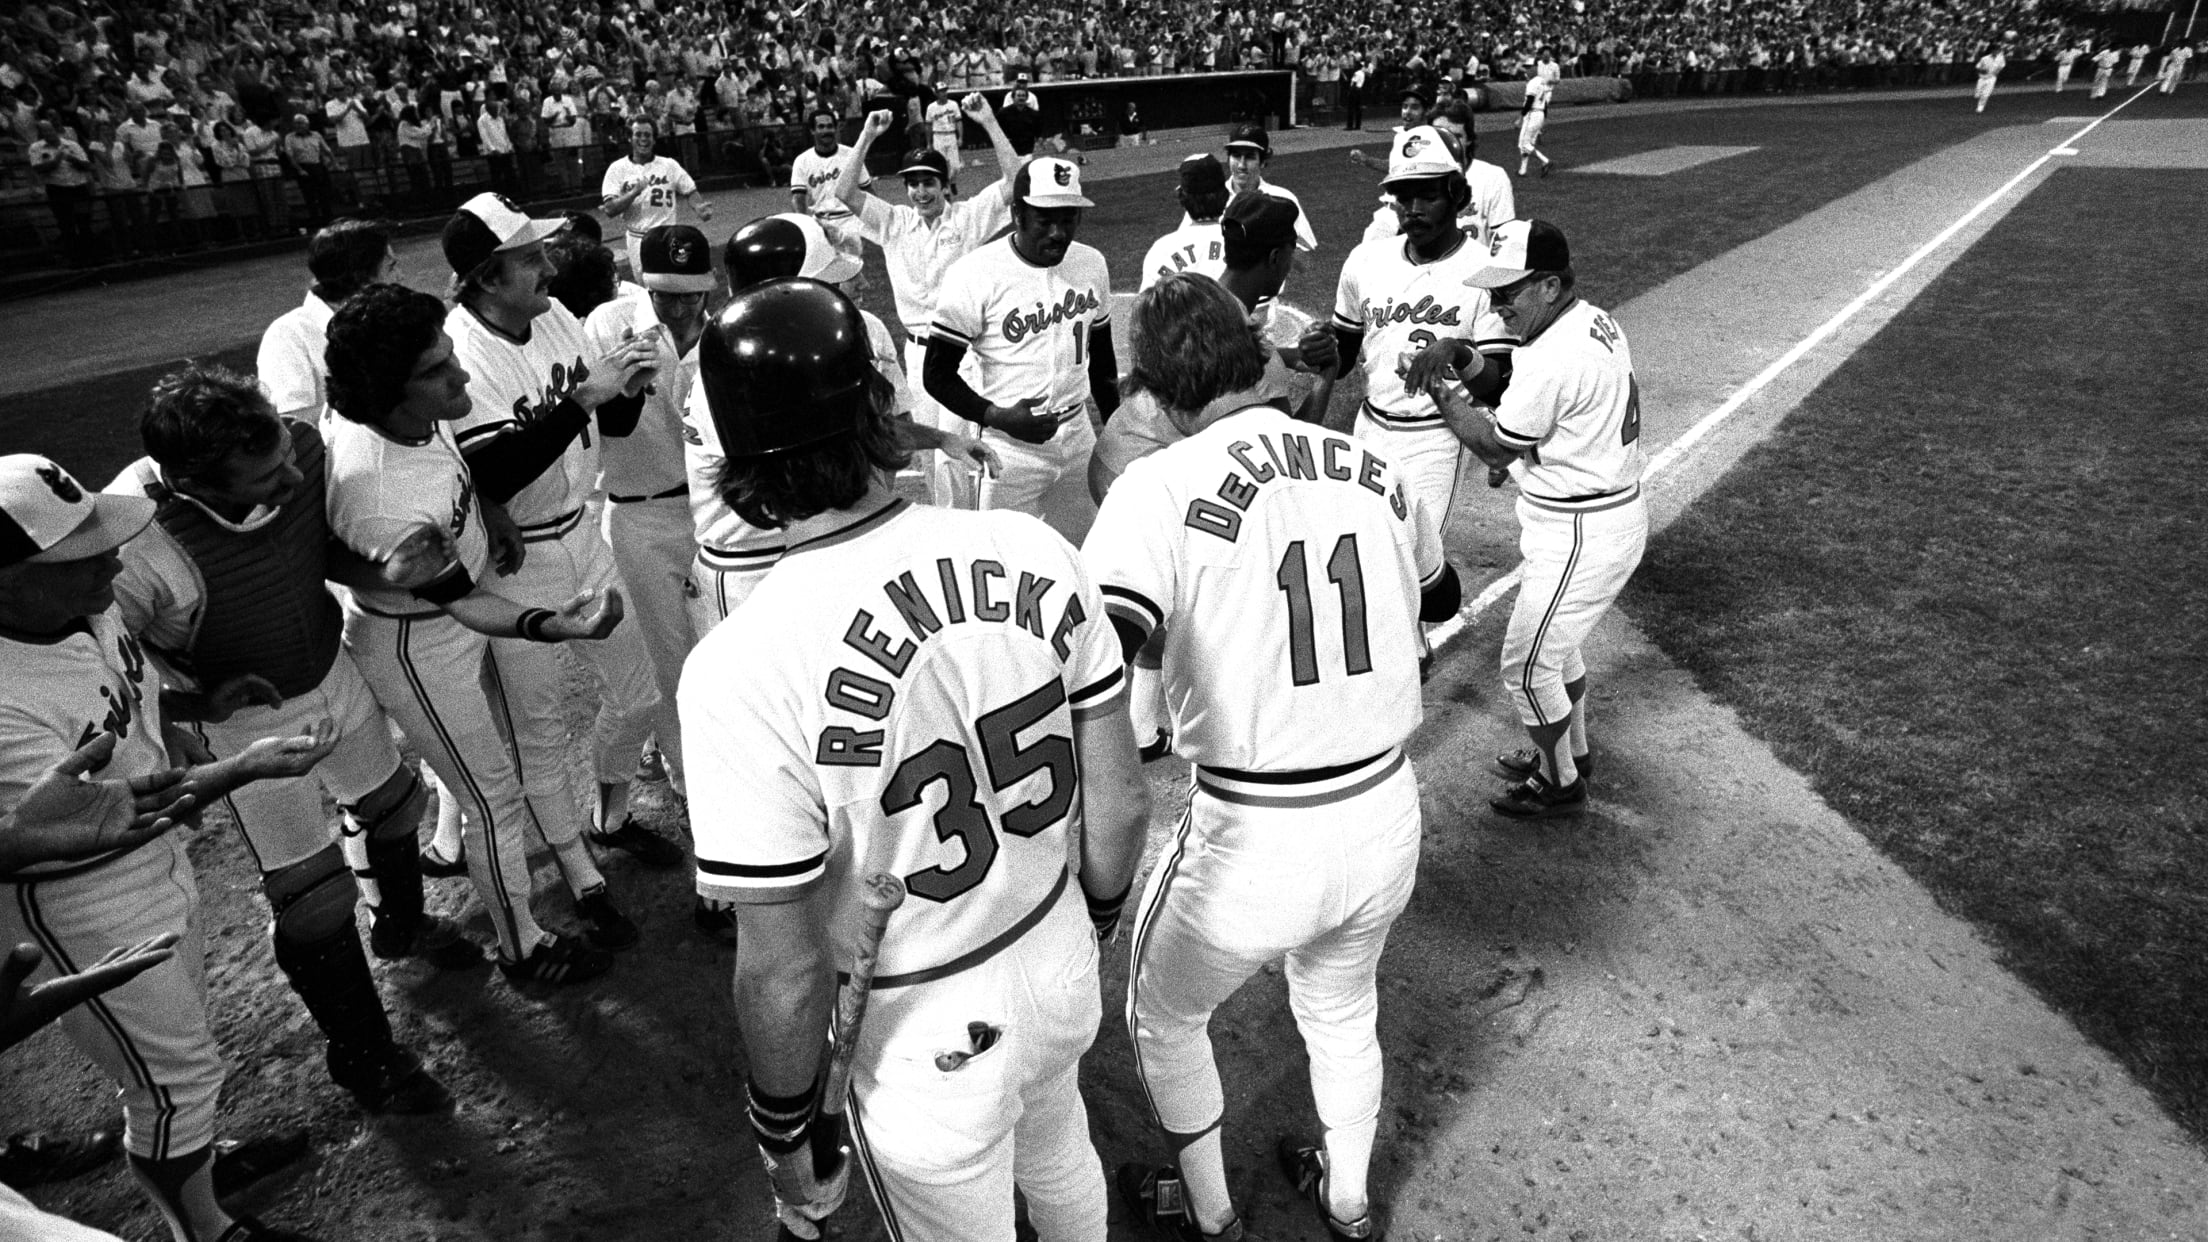 Something Magic: The Baltimore Orioles, 1979-1983